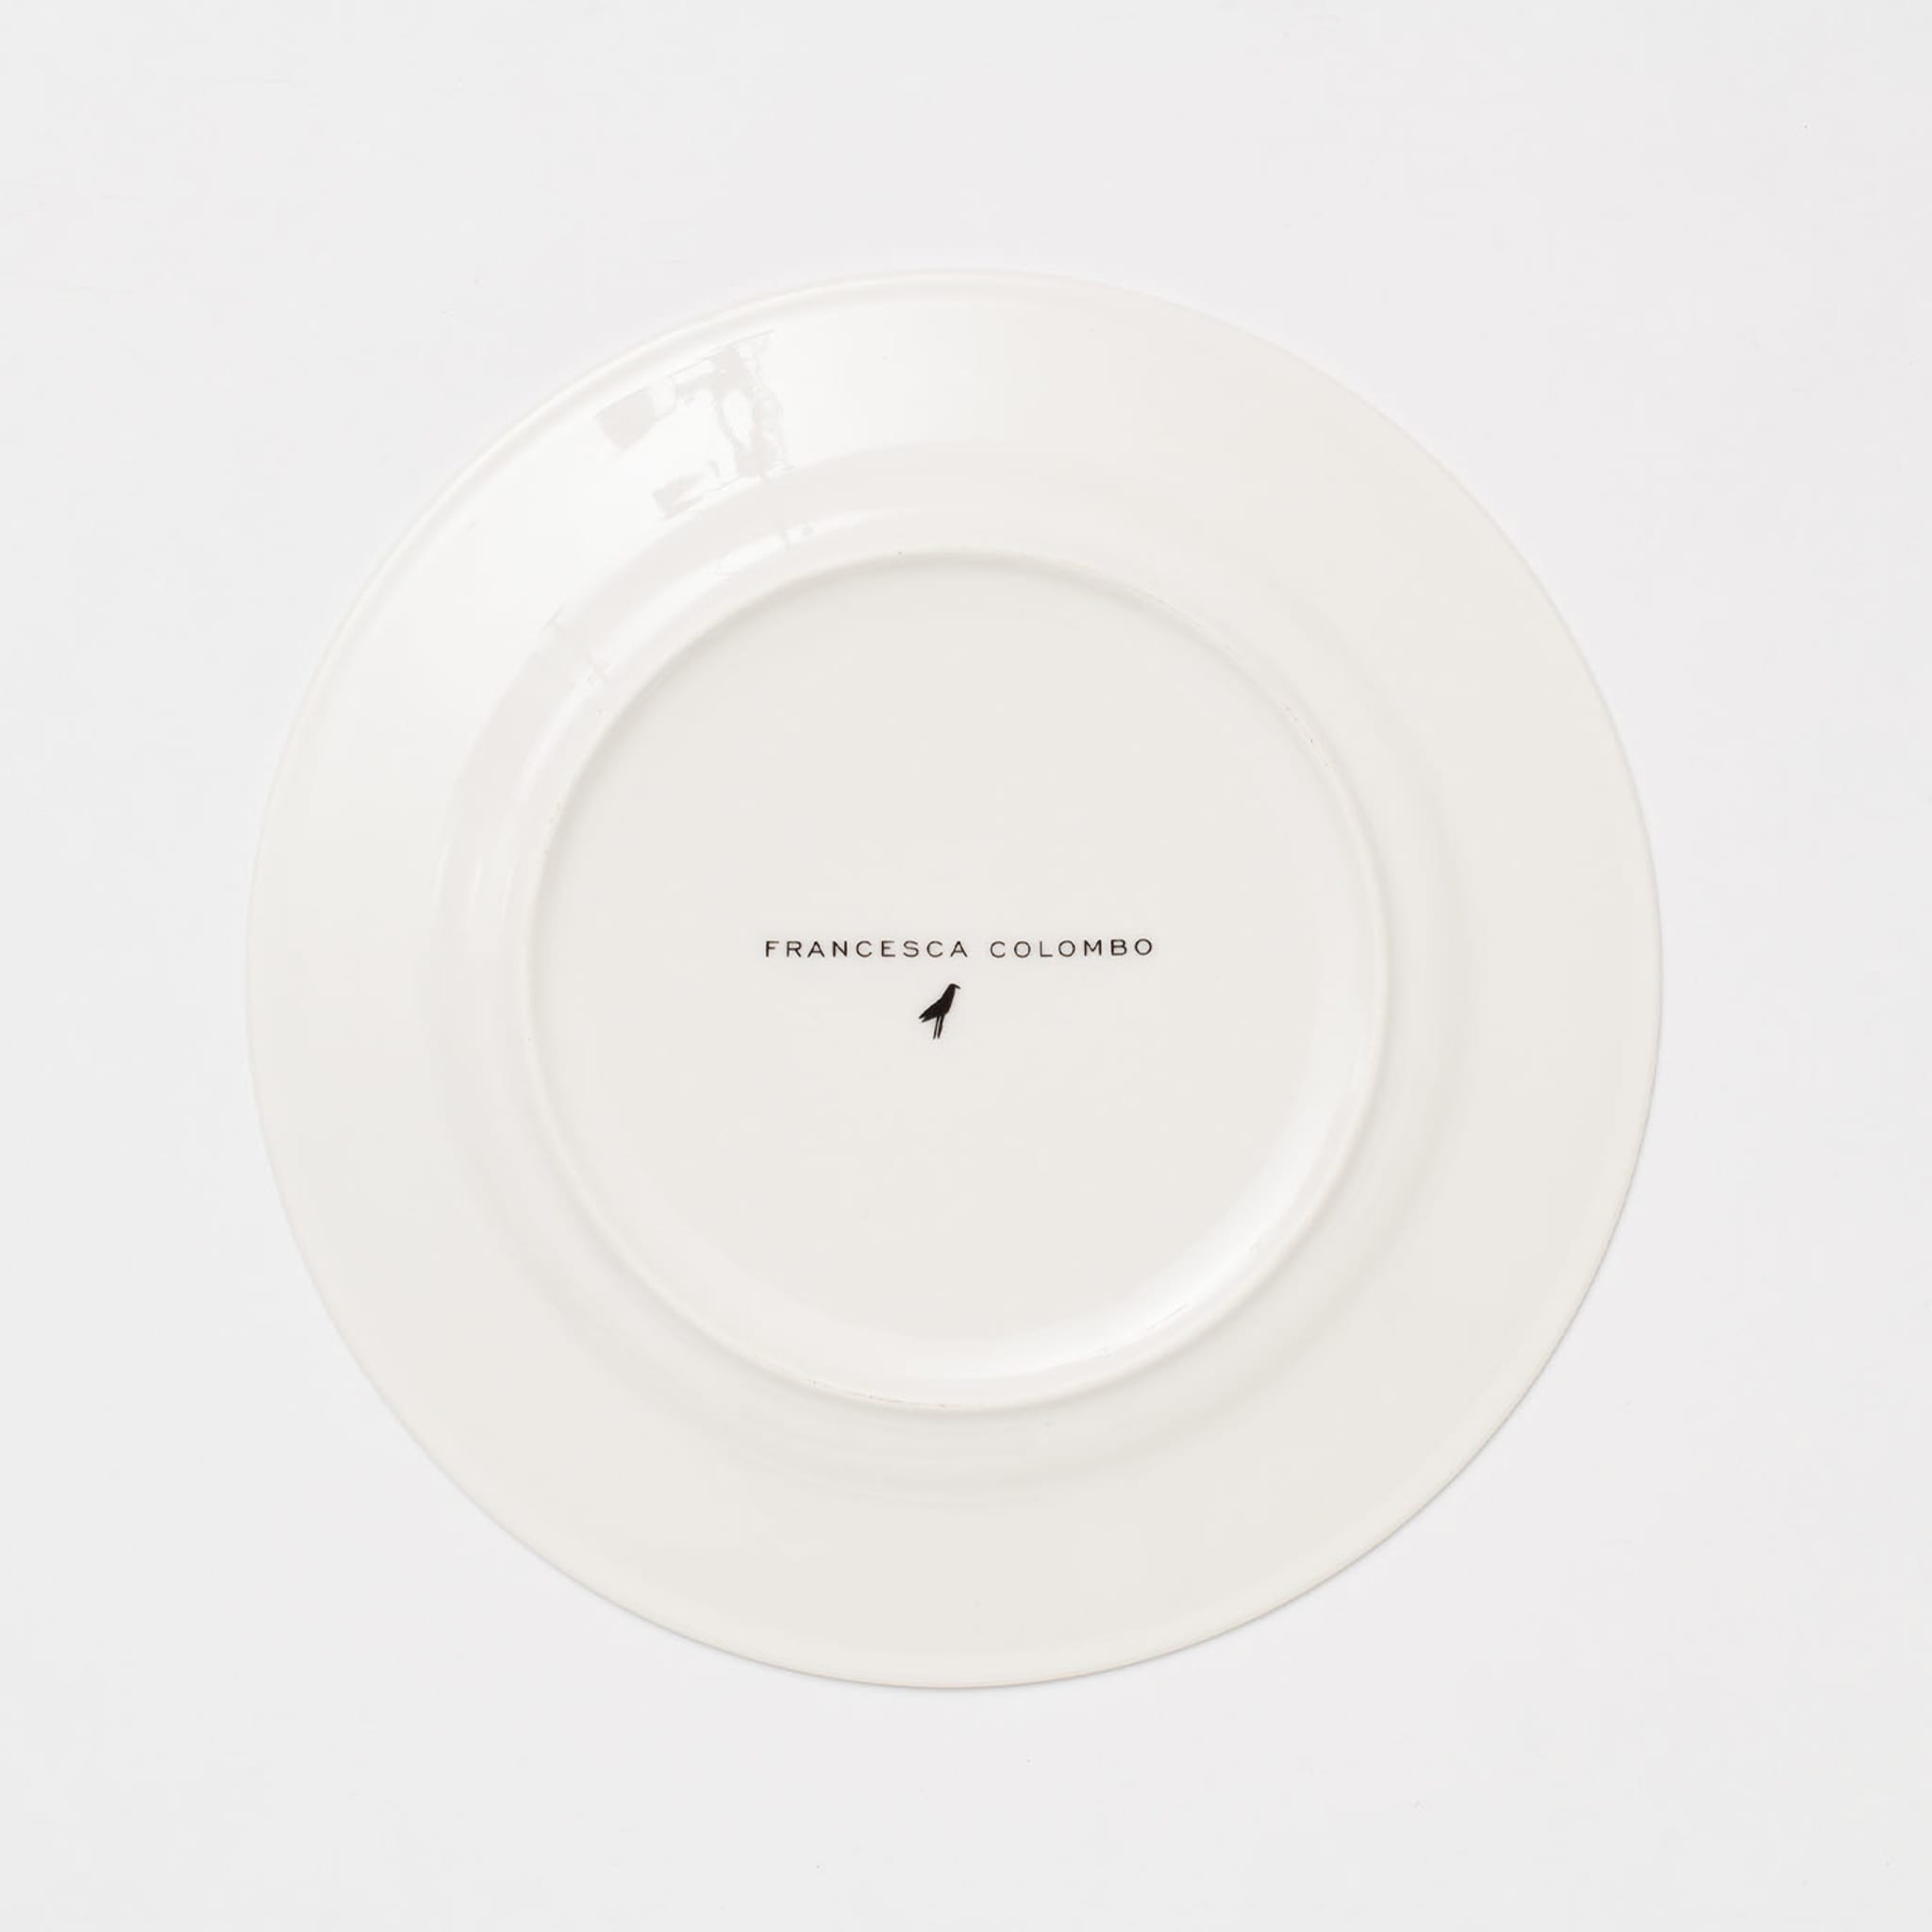 Bird Song Polychrome Dinner Plate #2 - Alternative view 3